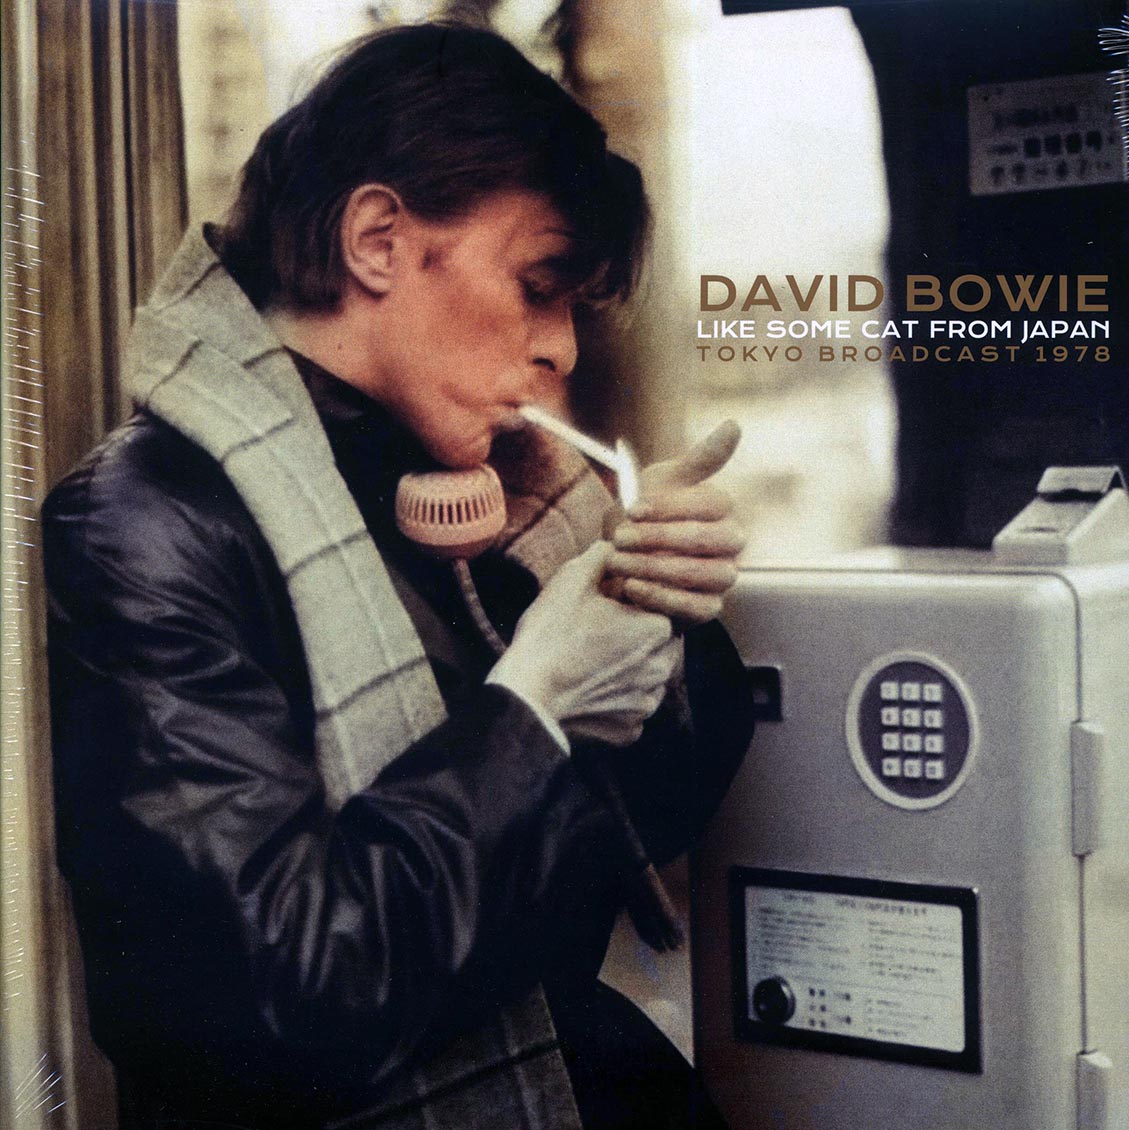 David Bowie - Like Some Cat From Japan: Tokyo Broadcast 1978 (ltd. ed.) (2xLP) (clear vinyl) - Vinyl LP